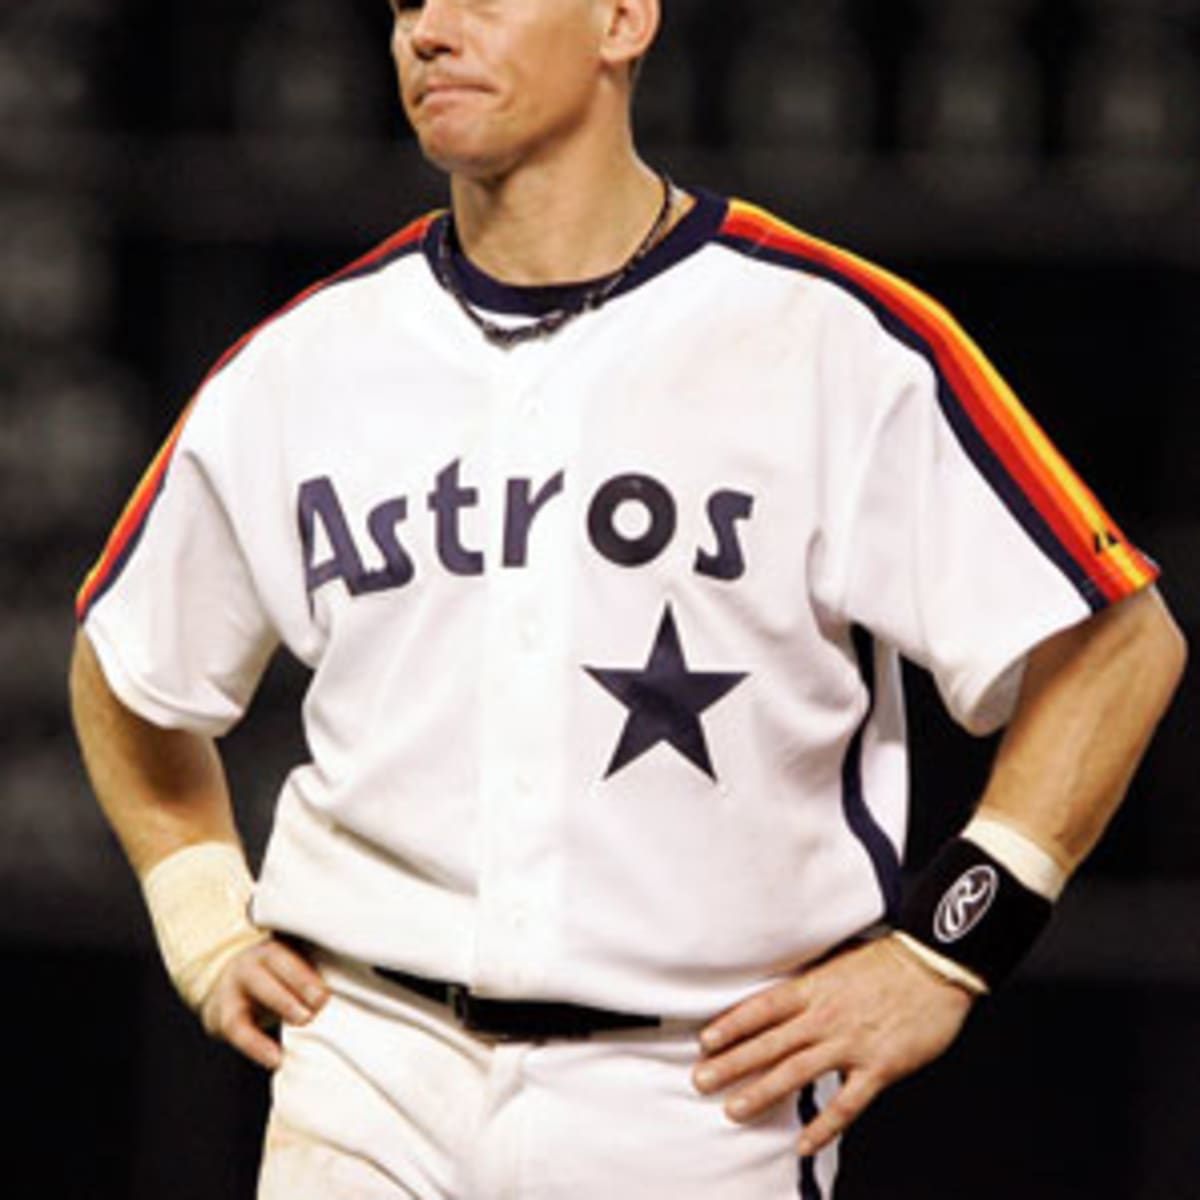 Astros legend Craig Biggio once lamented the unfair treatment of